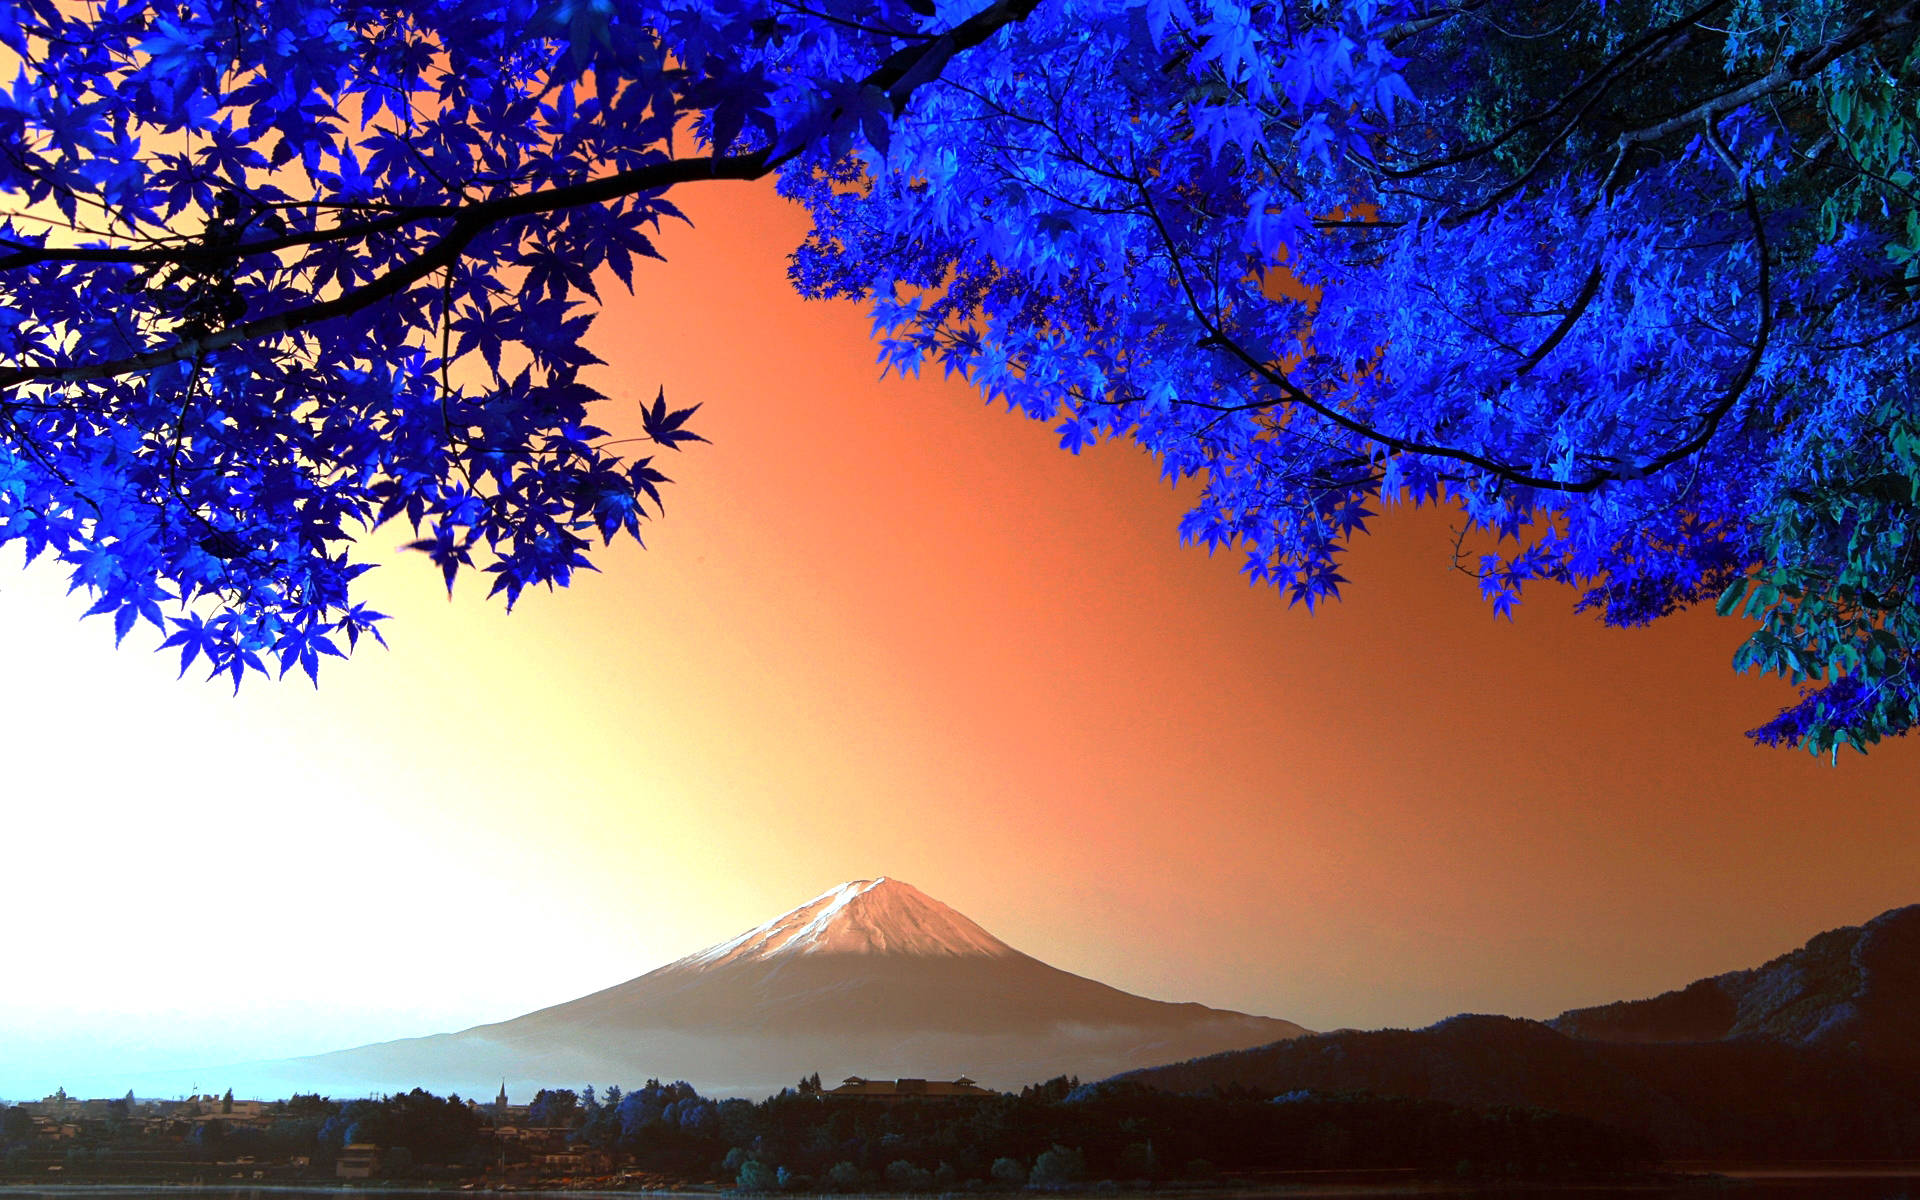 Blue Trees And Mount Fuji